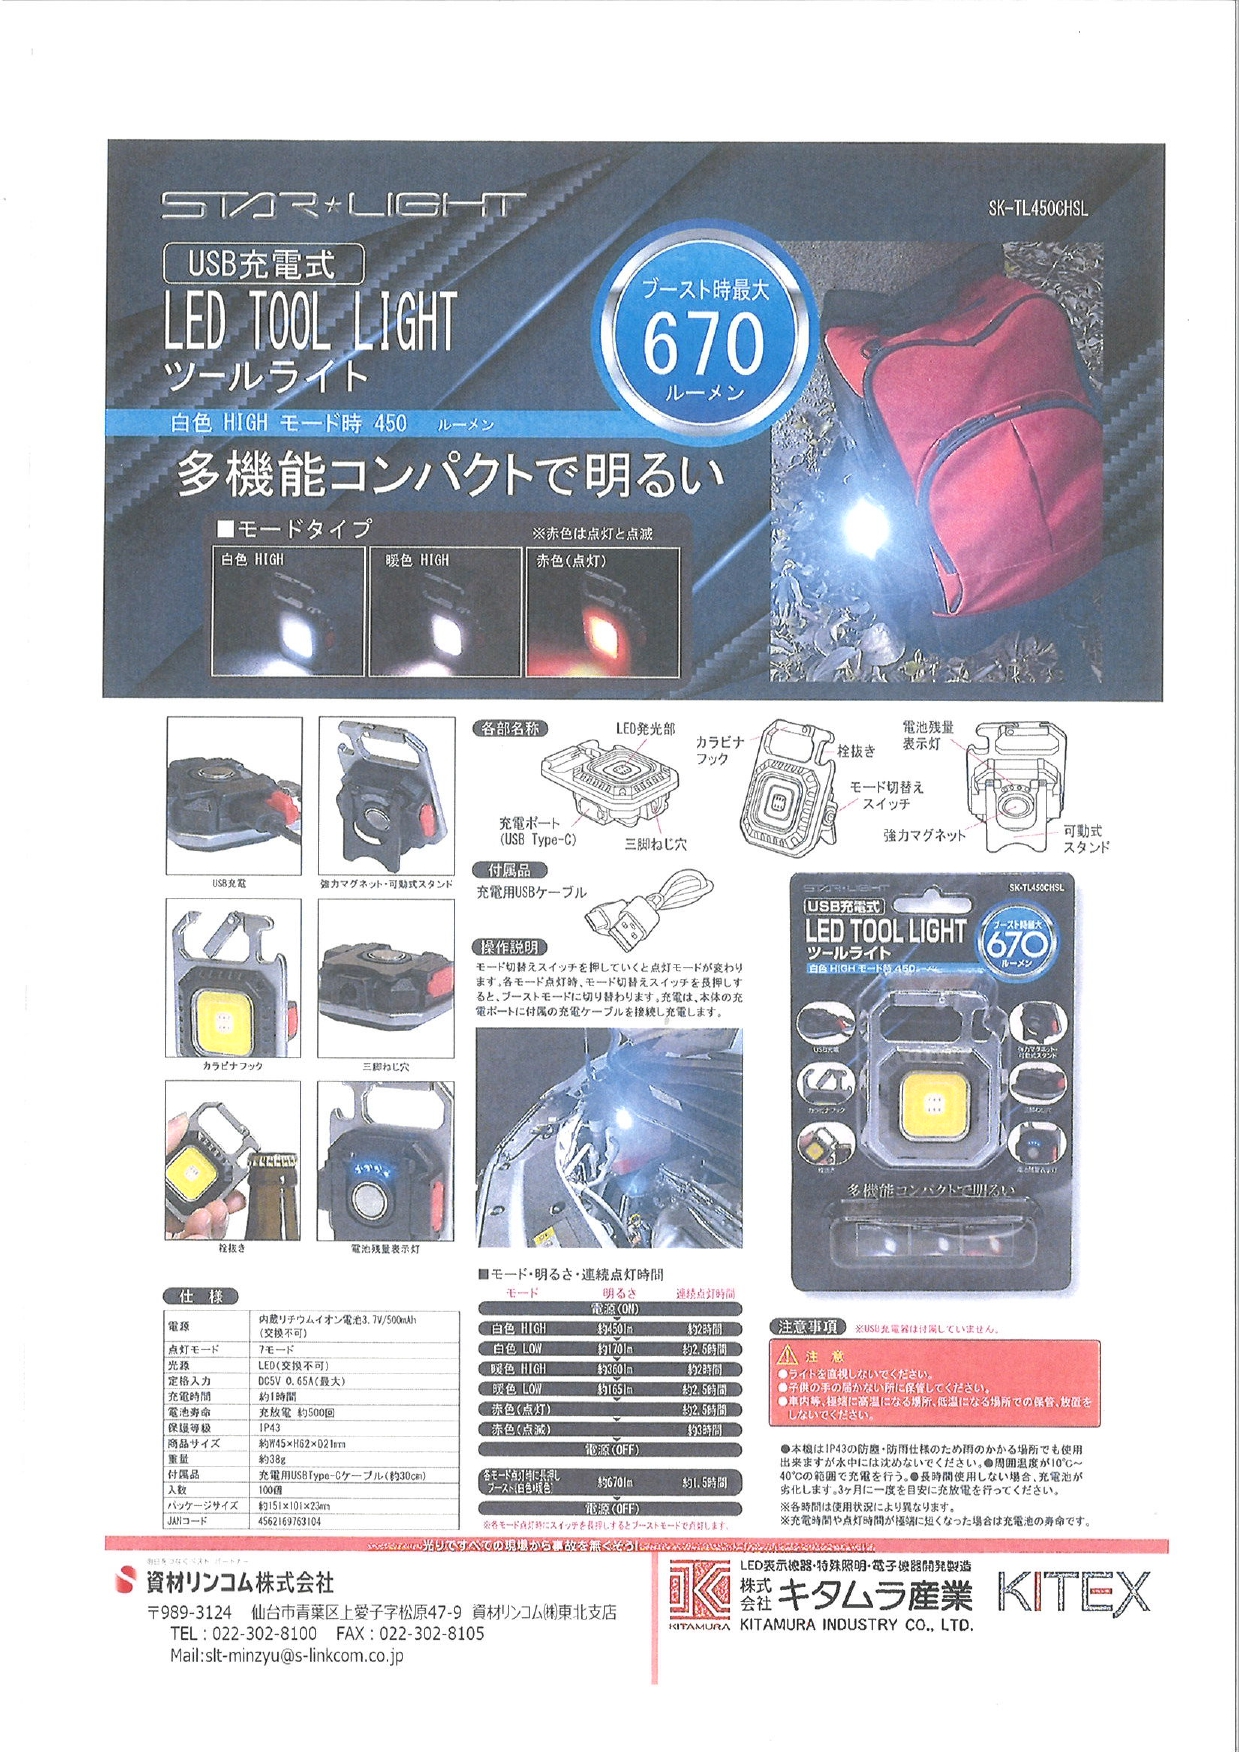 LEDツールライト【2310-01】